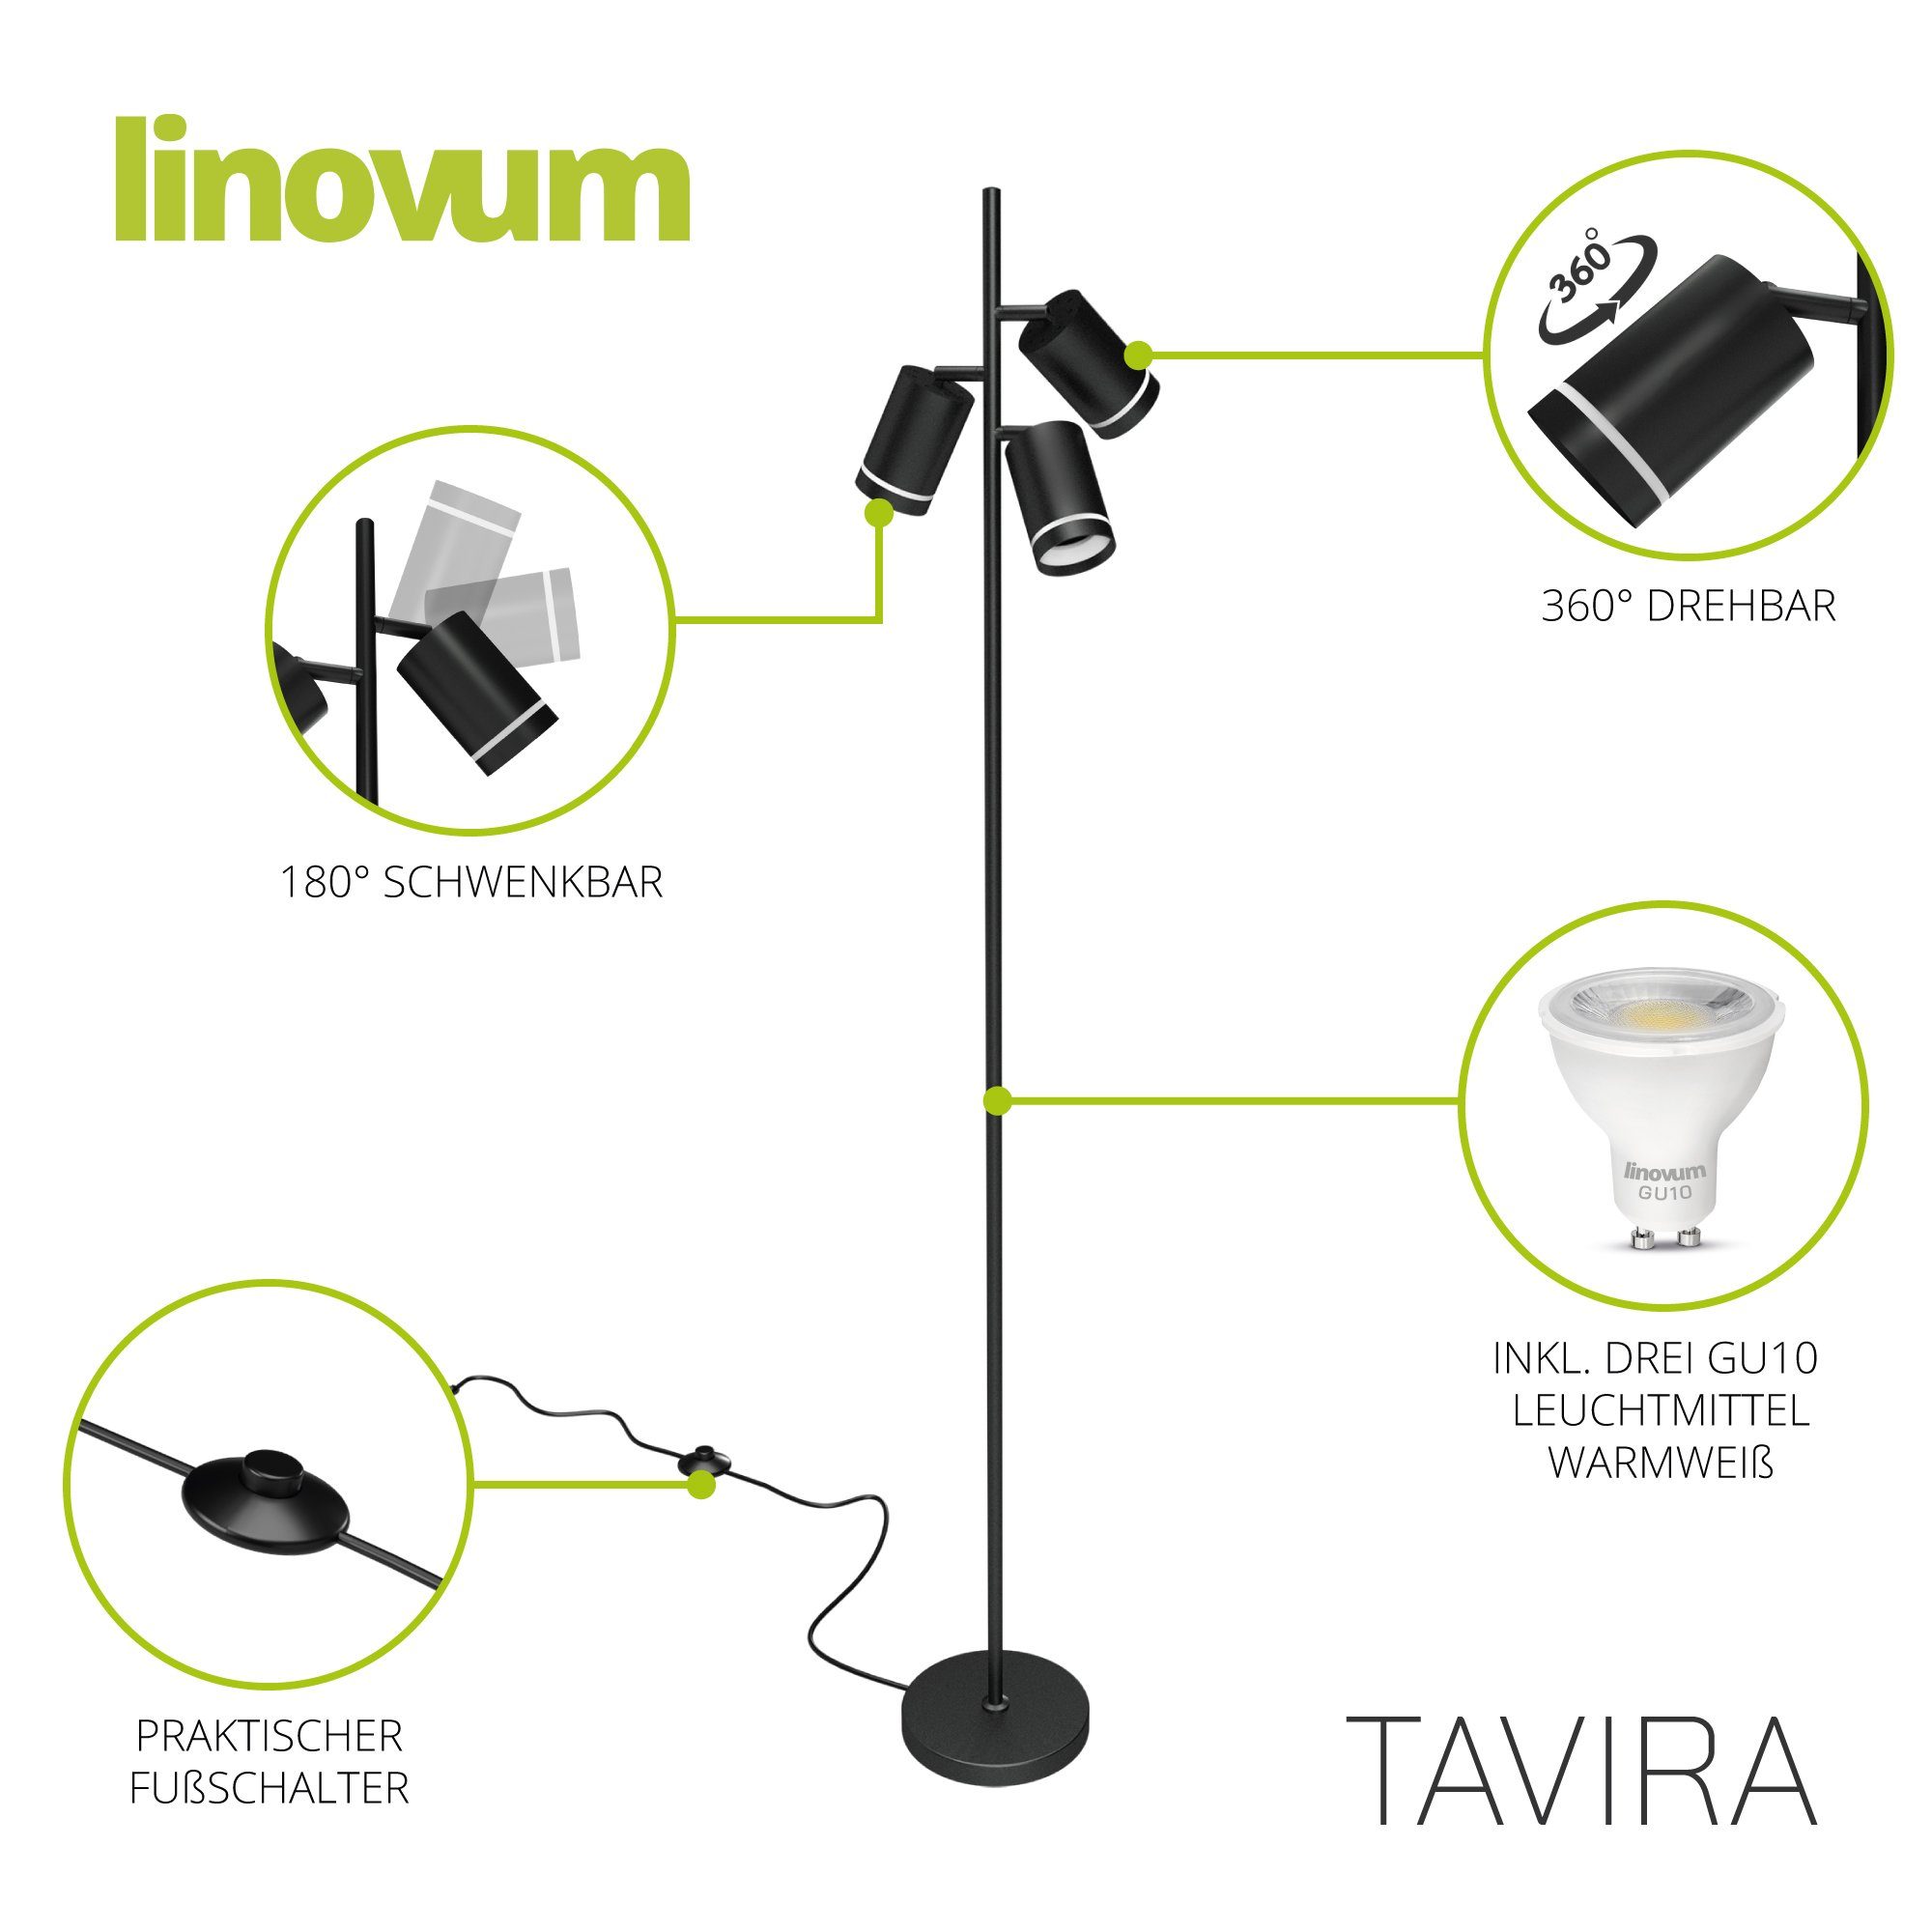 linovum LED Aufbaustrahler Stehleuchte Lampen Leuchtmittel inklusive, 3-flammig inklusive inkl. drehbar 2x Leuchtmittel TAVIRA GU10 6W